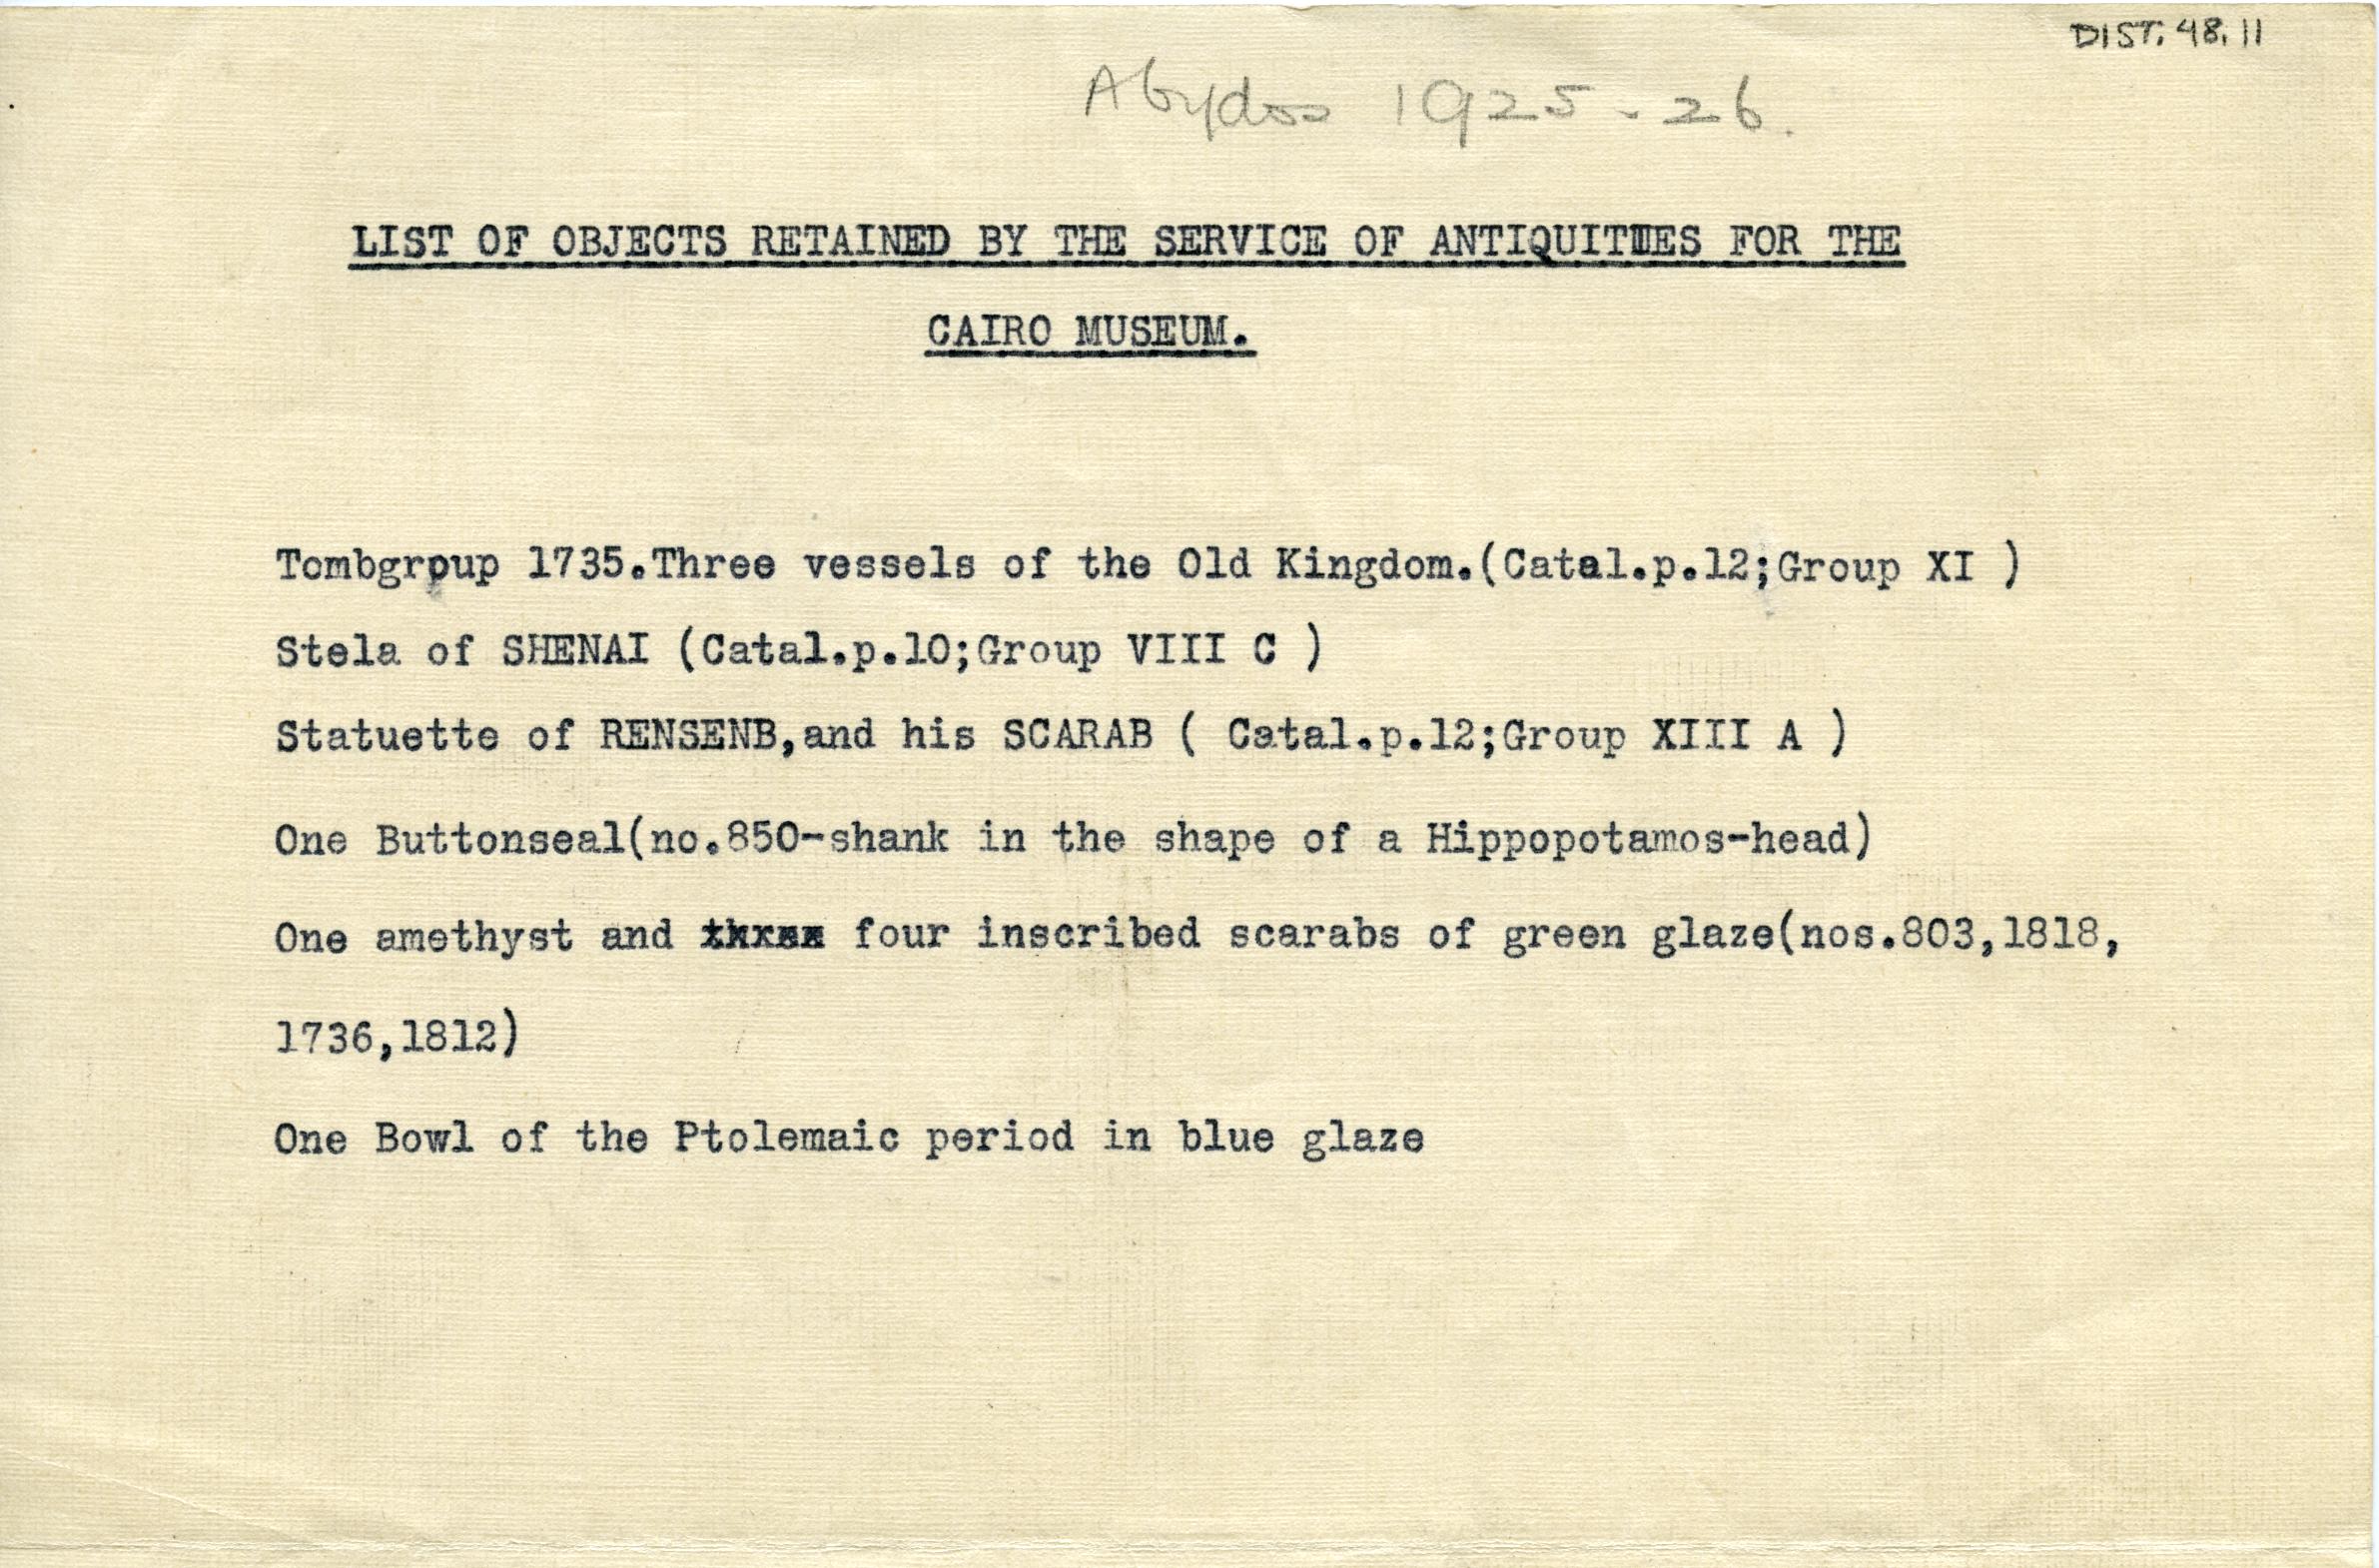 1925-26 Abydos DIST.48.11